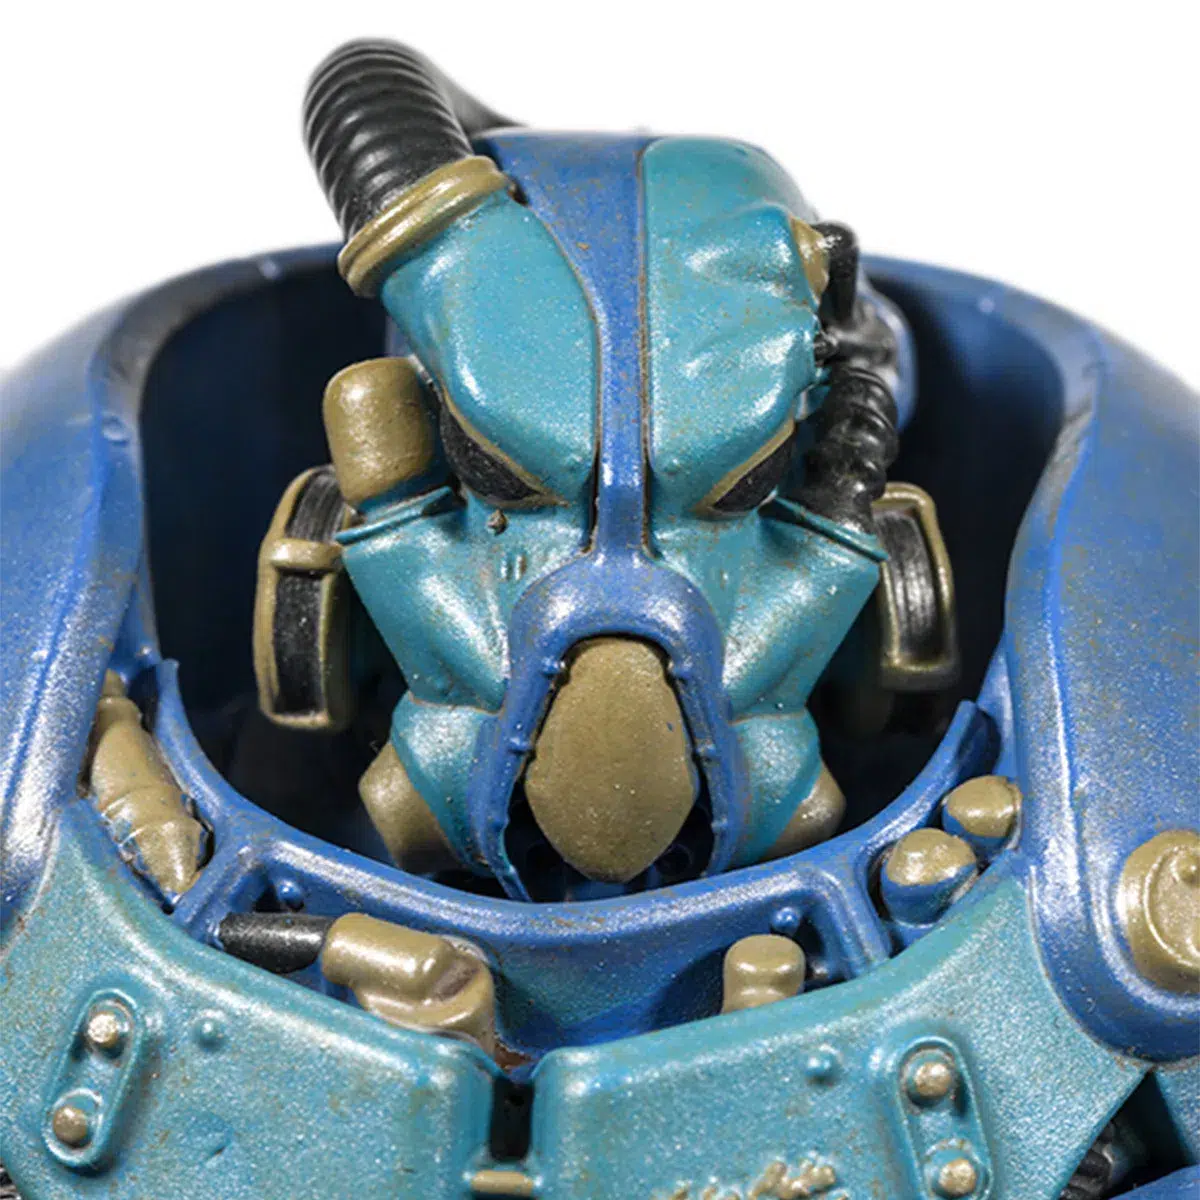 Fallout Power Armor Statue "Nuka Cola Quantum" Image 5